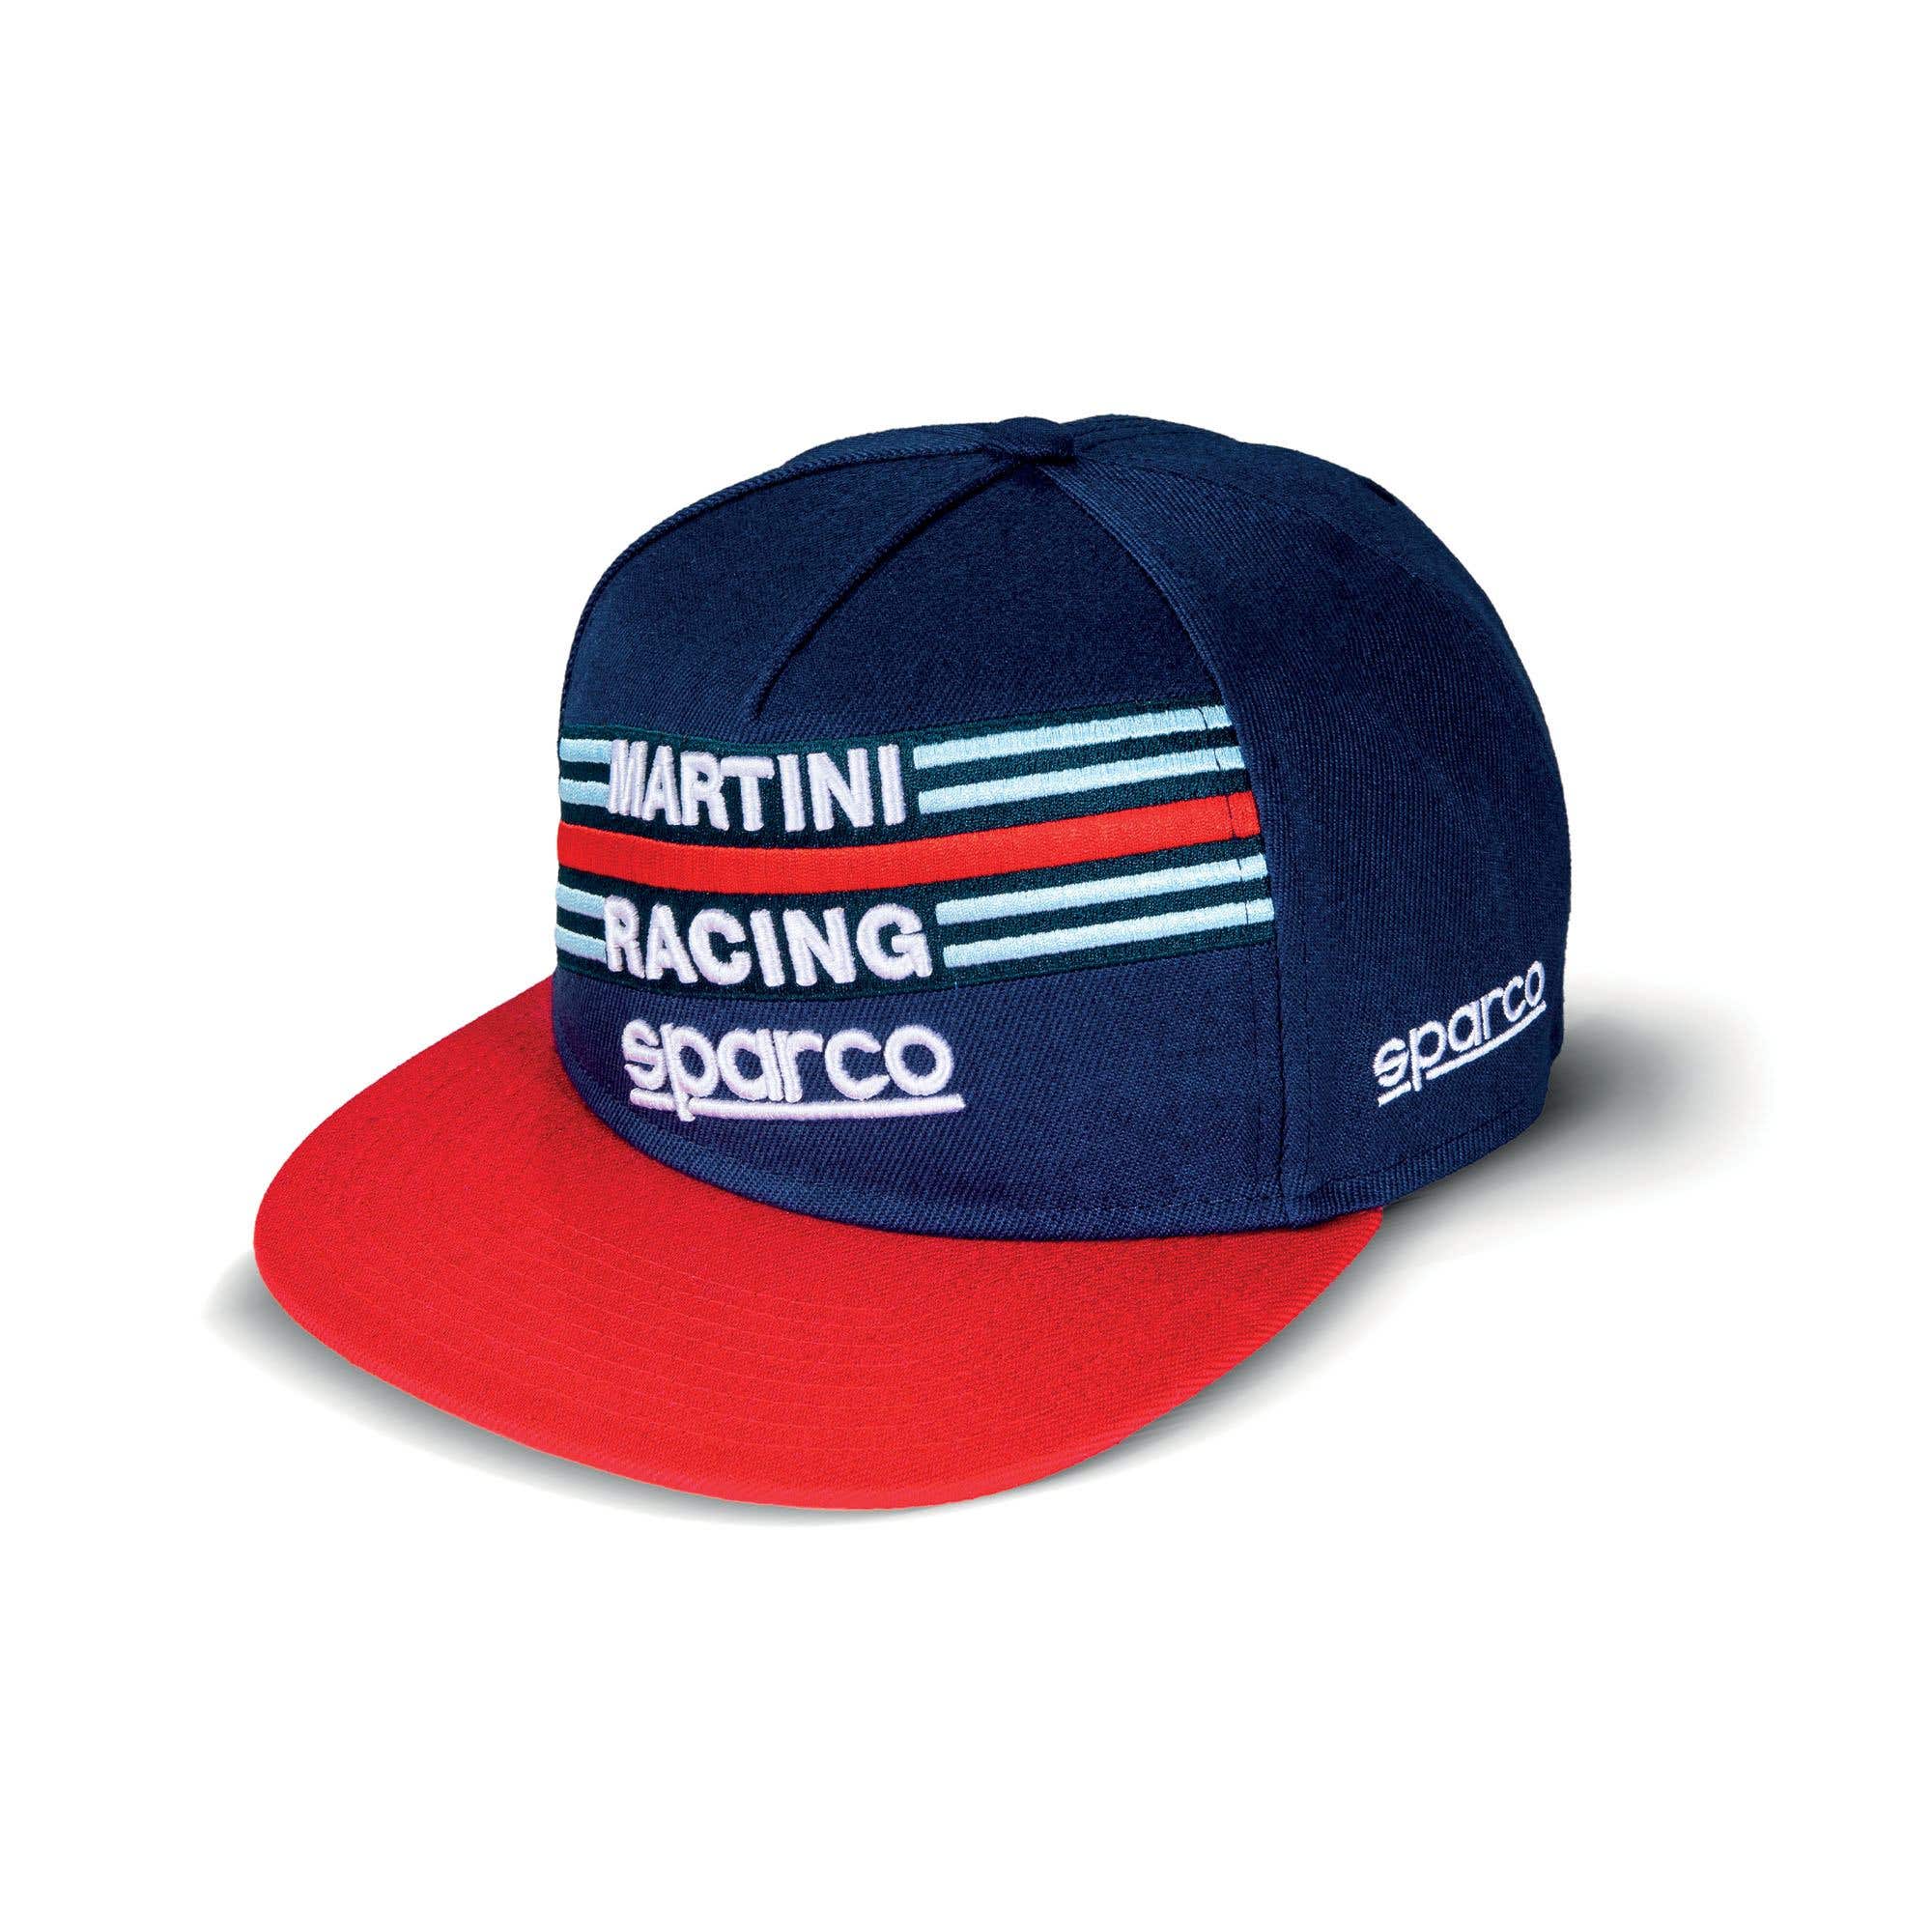 FLAT VISOR CAP MARTINI RACING - Sparco Shop